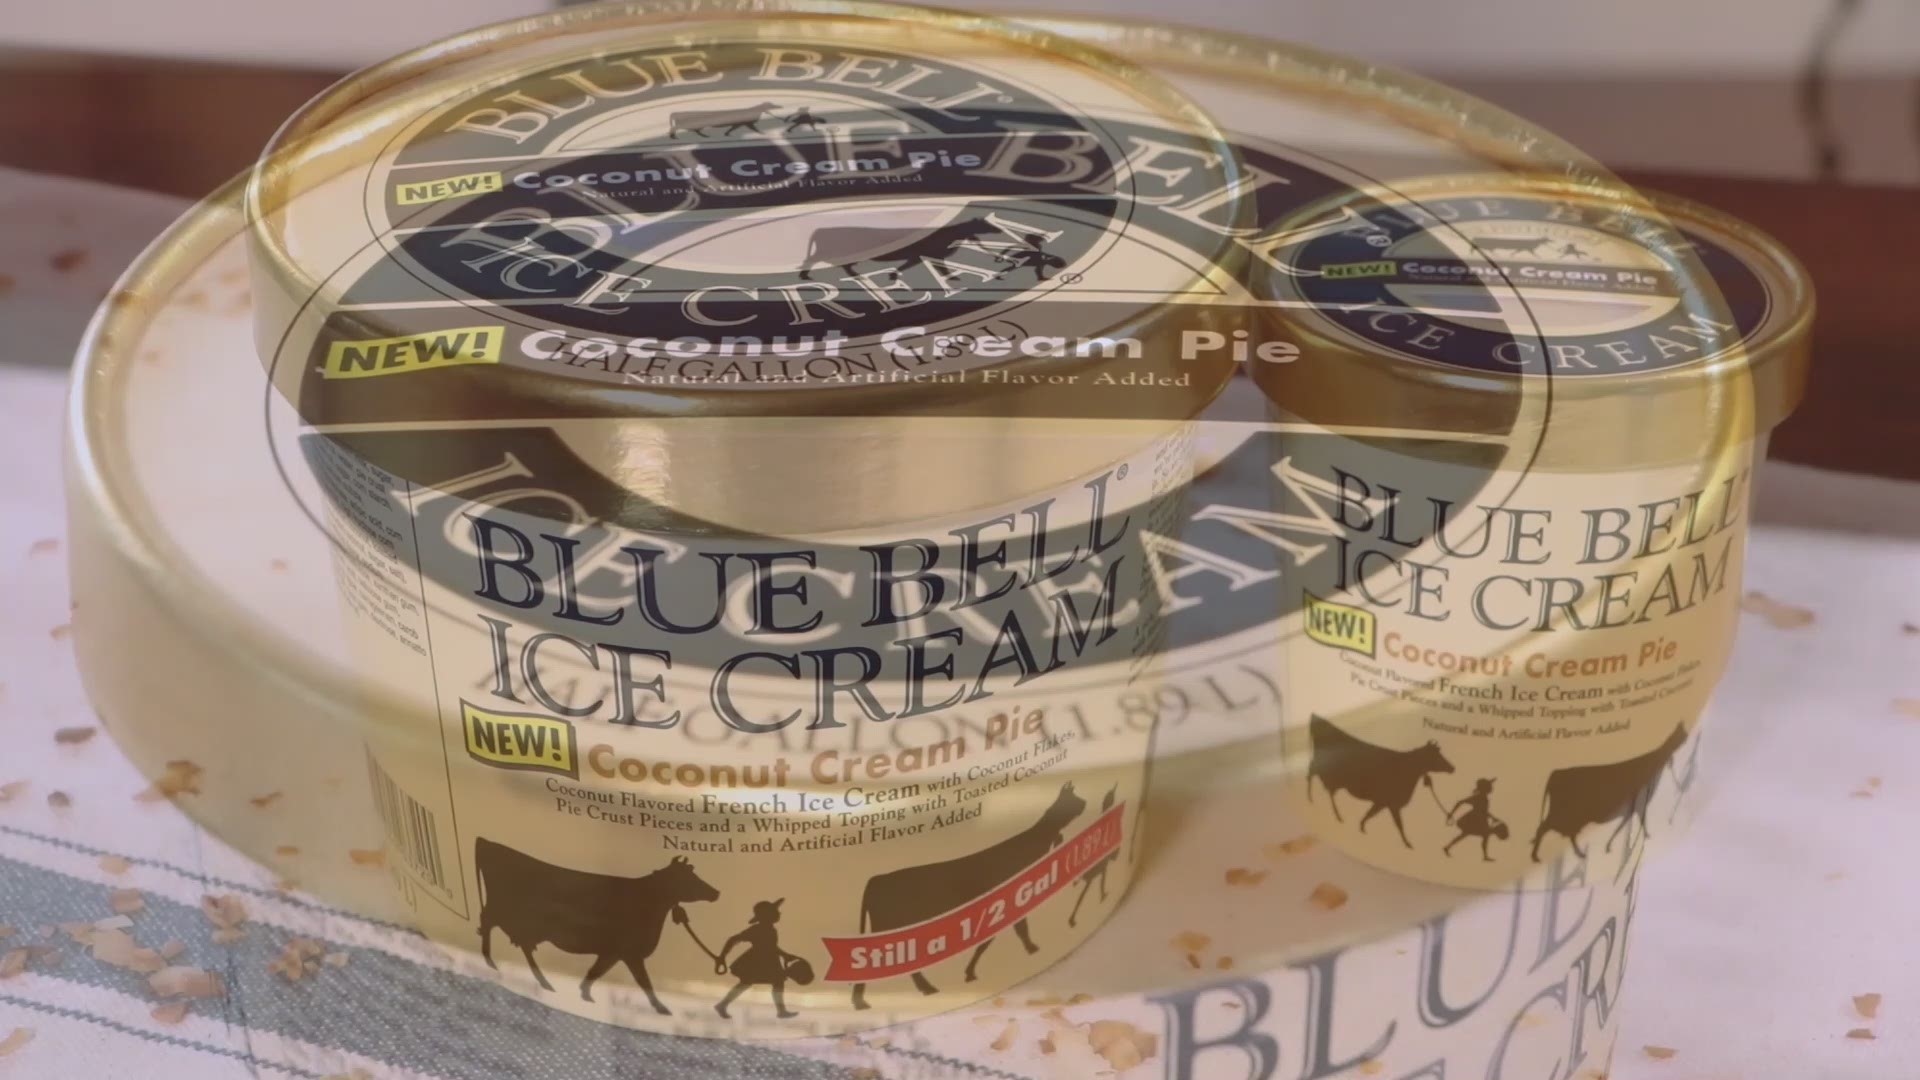 Blue Bell Coconut Ice Cream